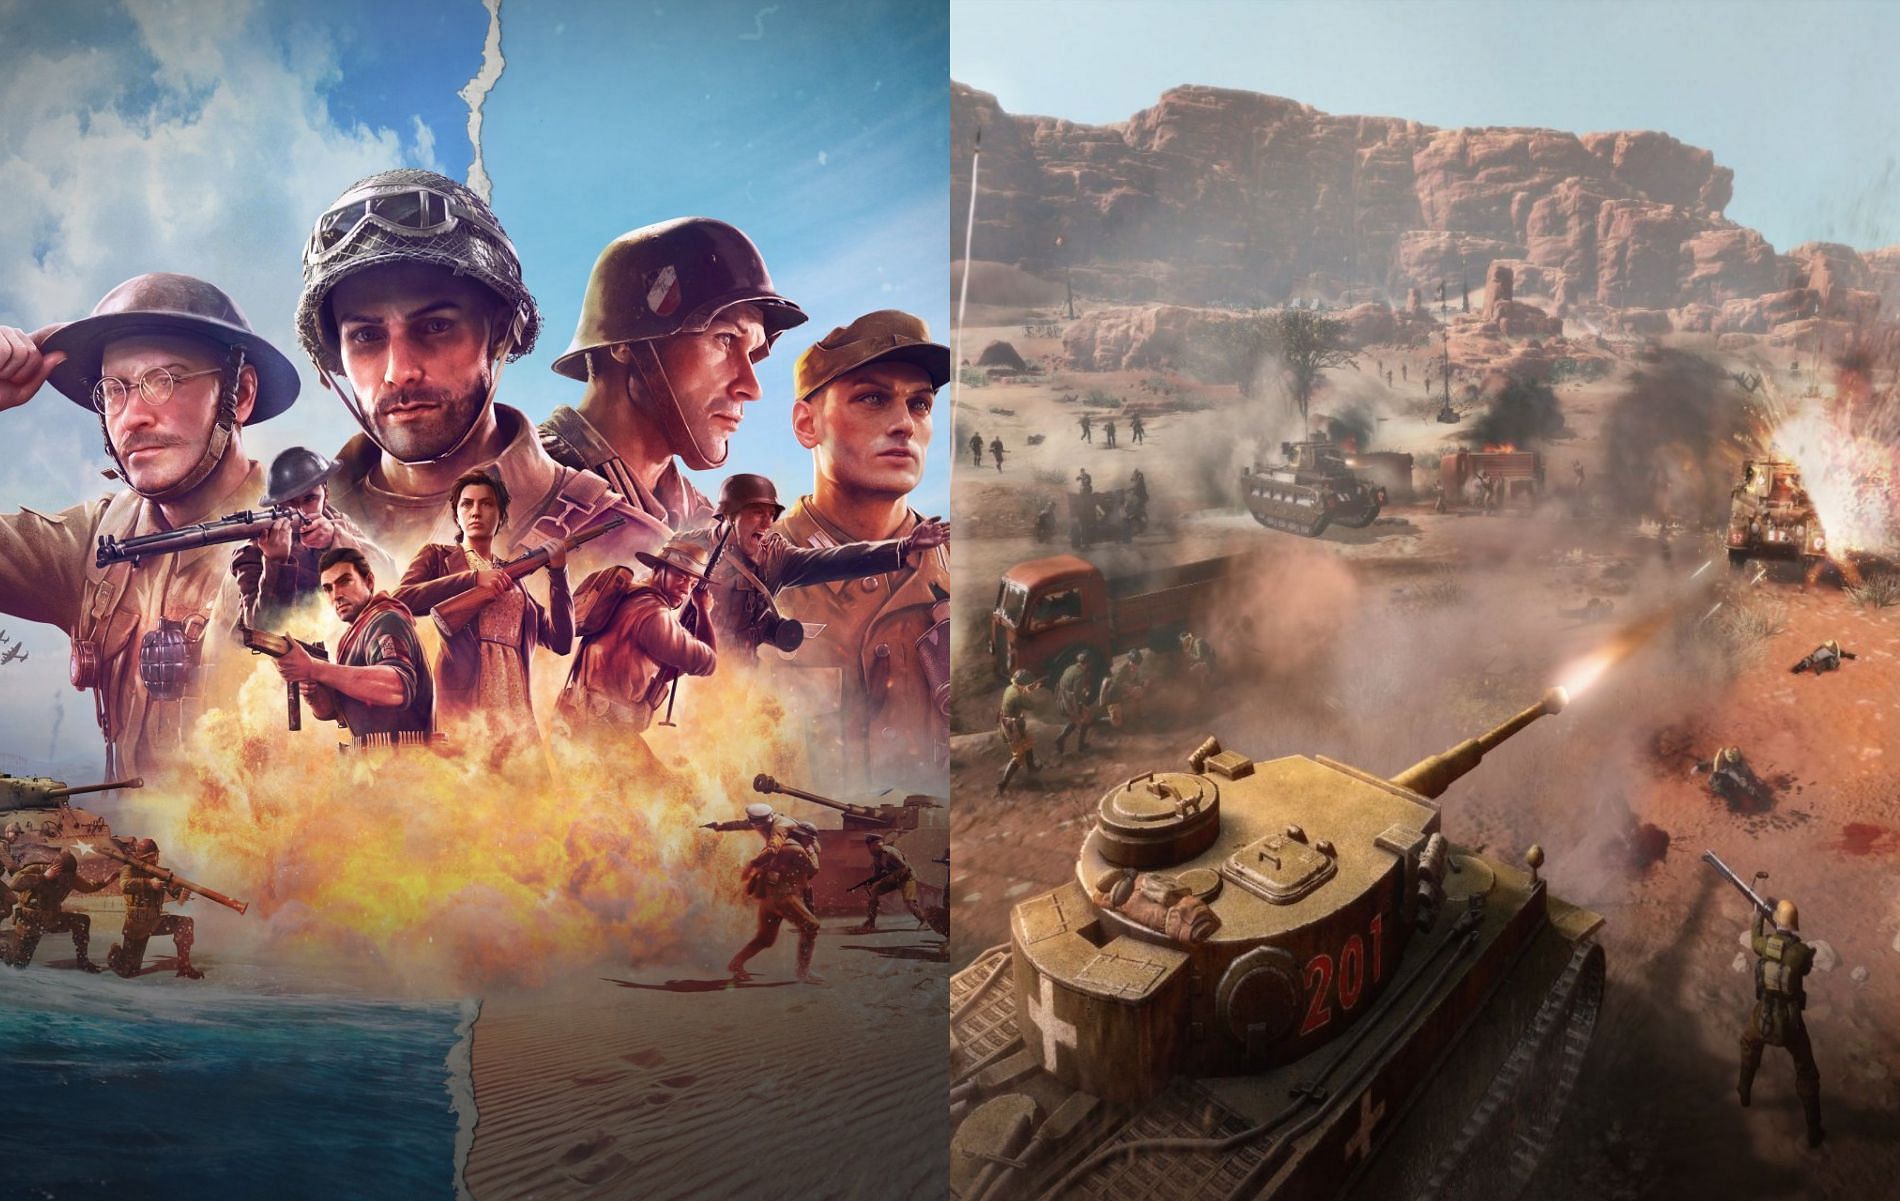 Battlefield V' Preview: A Thoroughly Modern World War II Game